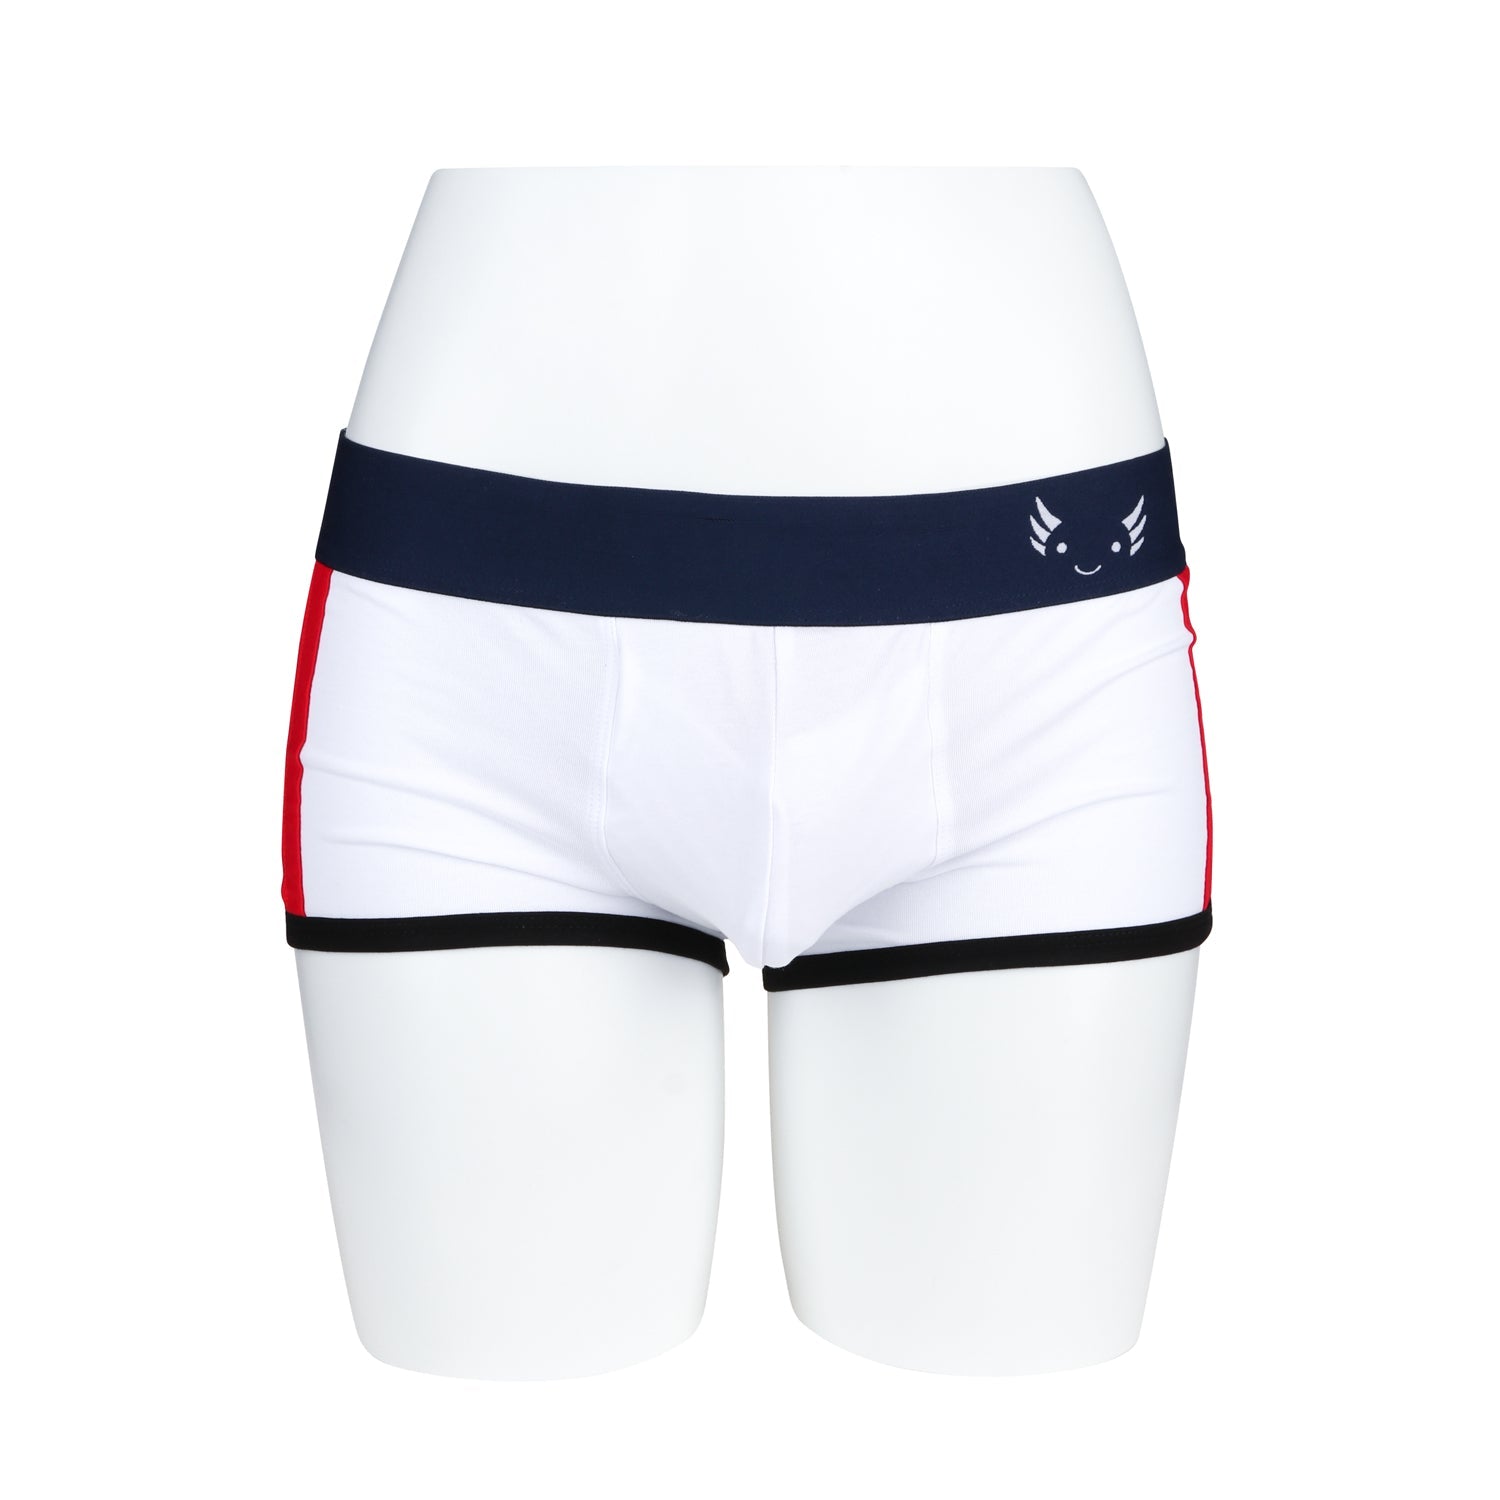 FTM Trans Boxer Underwear & STP Package Deal